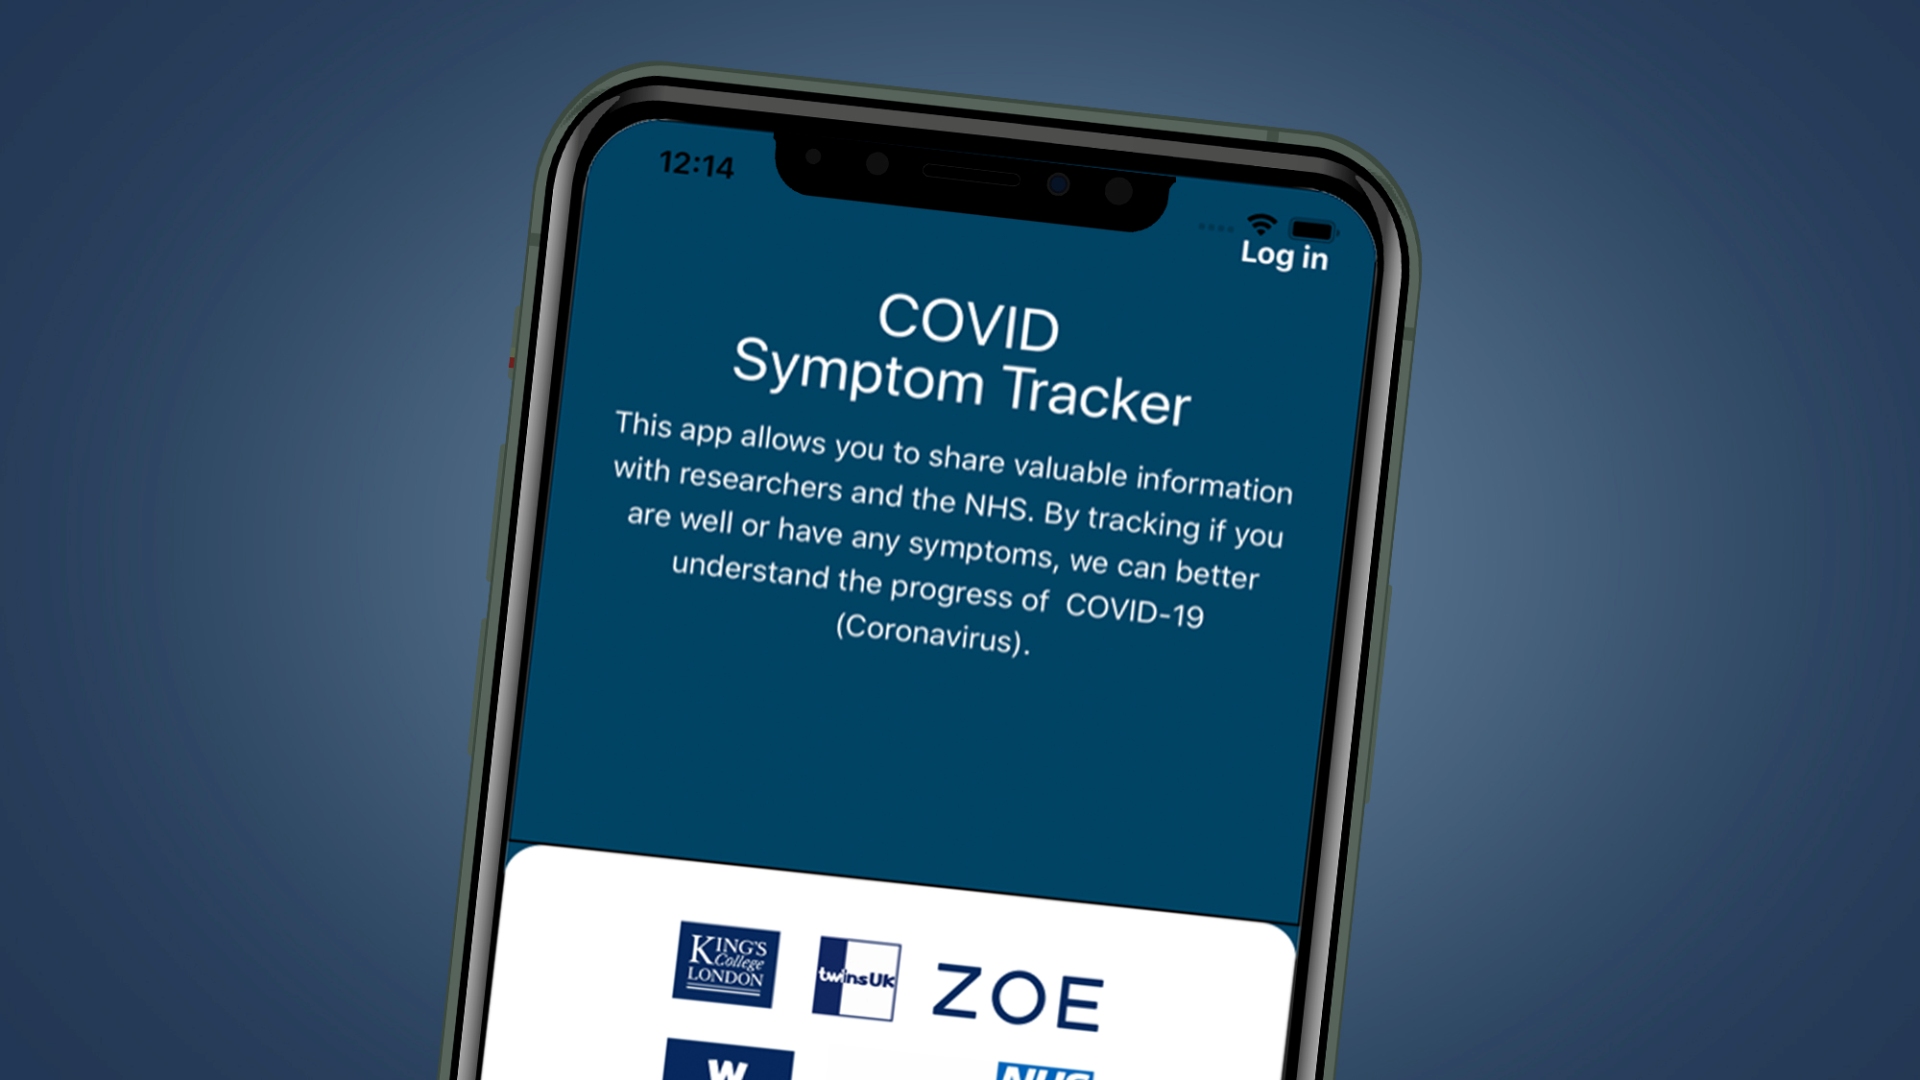 COVID-19 Symptom Tracker App To Download